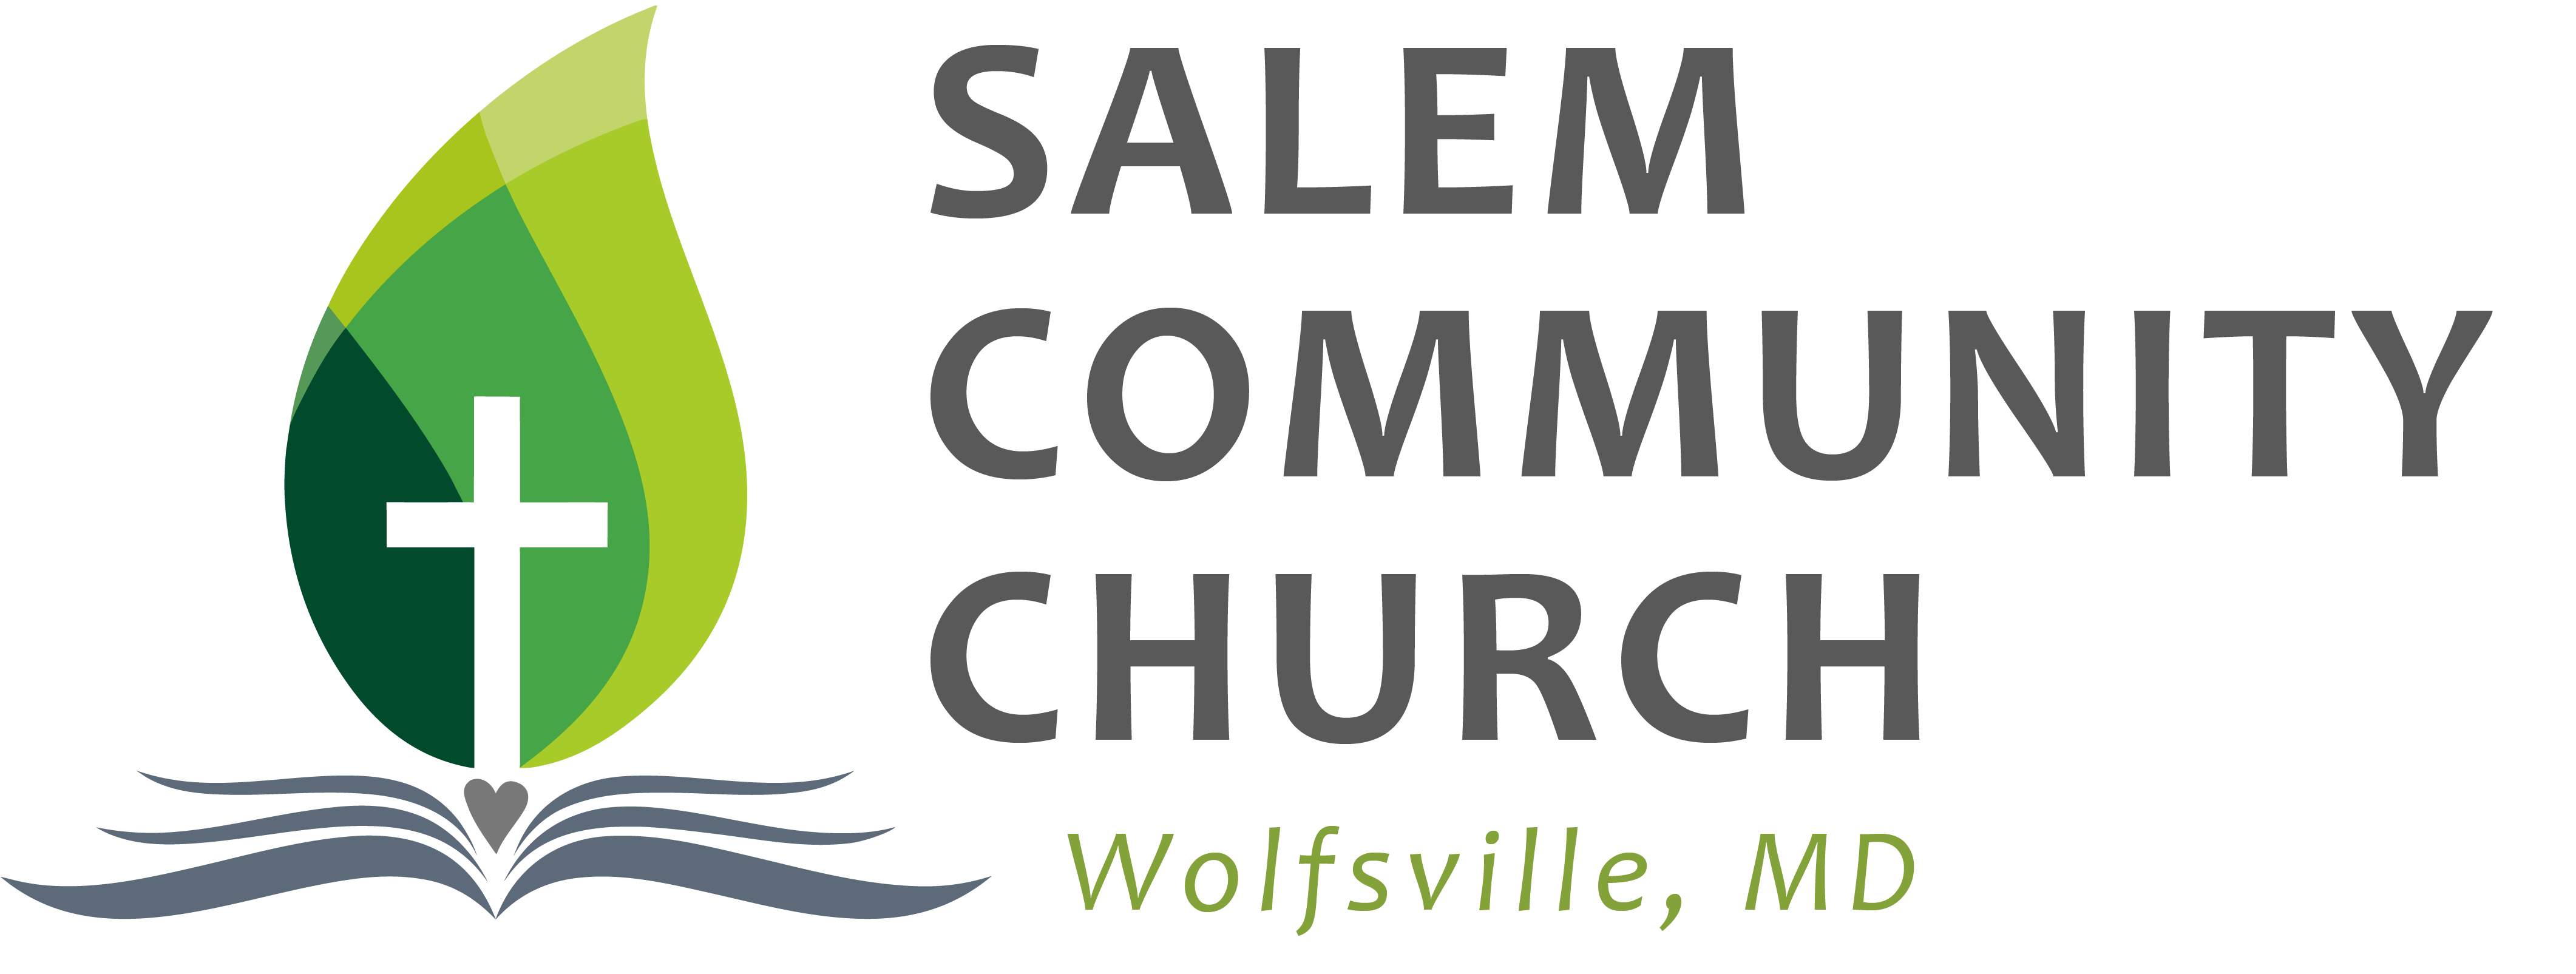 Salem Community Church Wolfsville